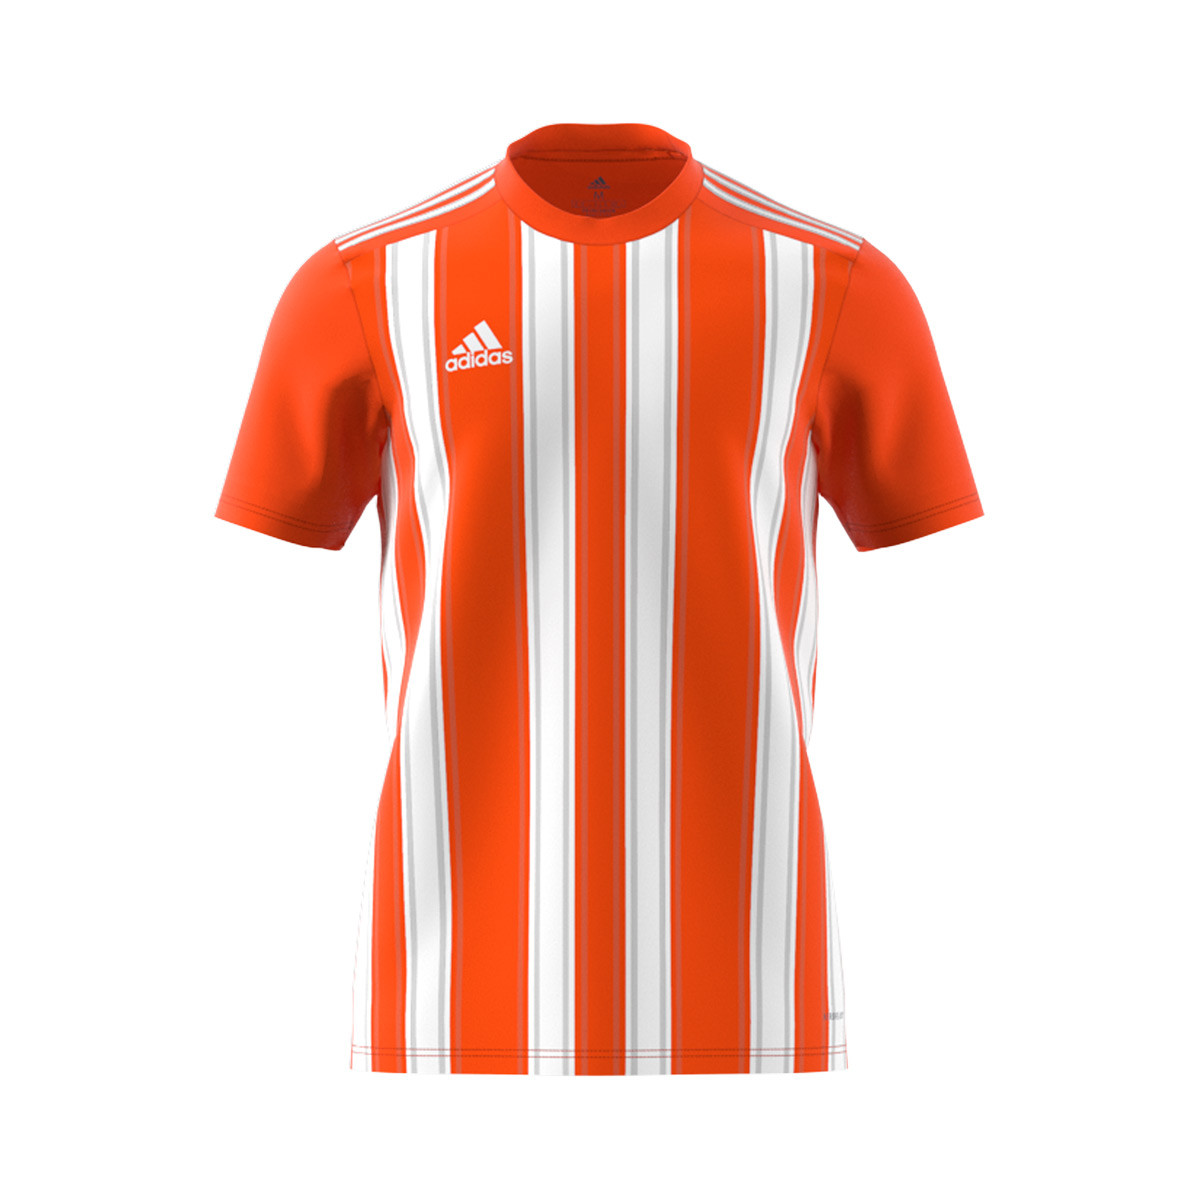 Jersey adidas Striped 21 Team orange-White - Fútbol Emotion